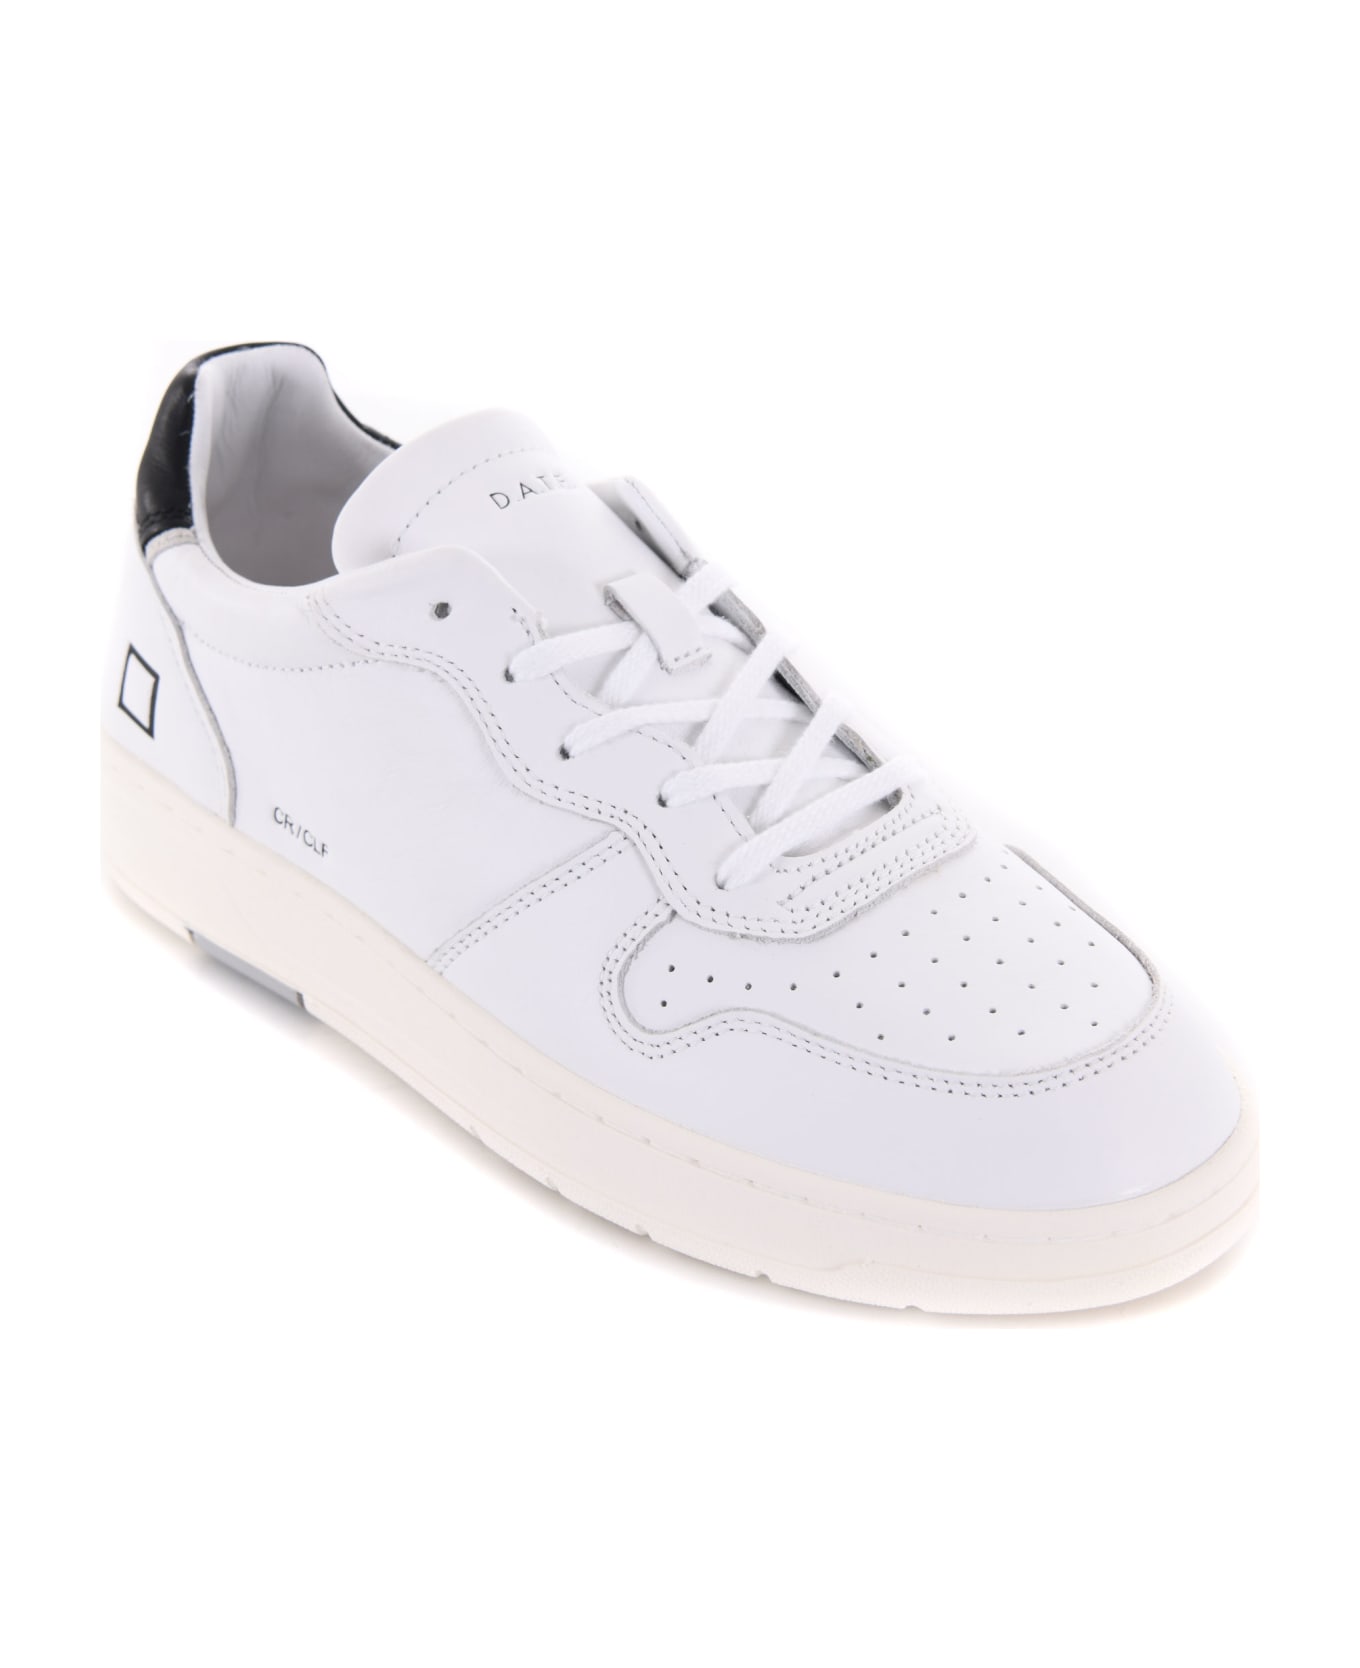 D.A.T.E. Sneakers "court Calf" In Leather - Bianco/nero